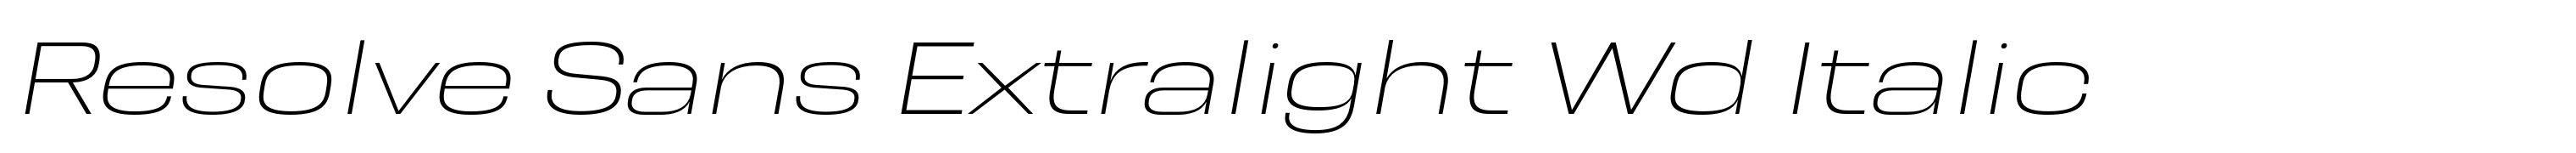 Resolve Sans Extralight Wd Italic